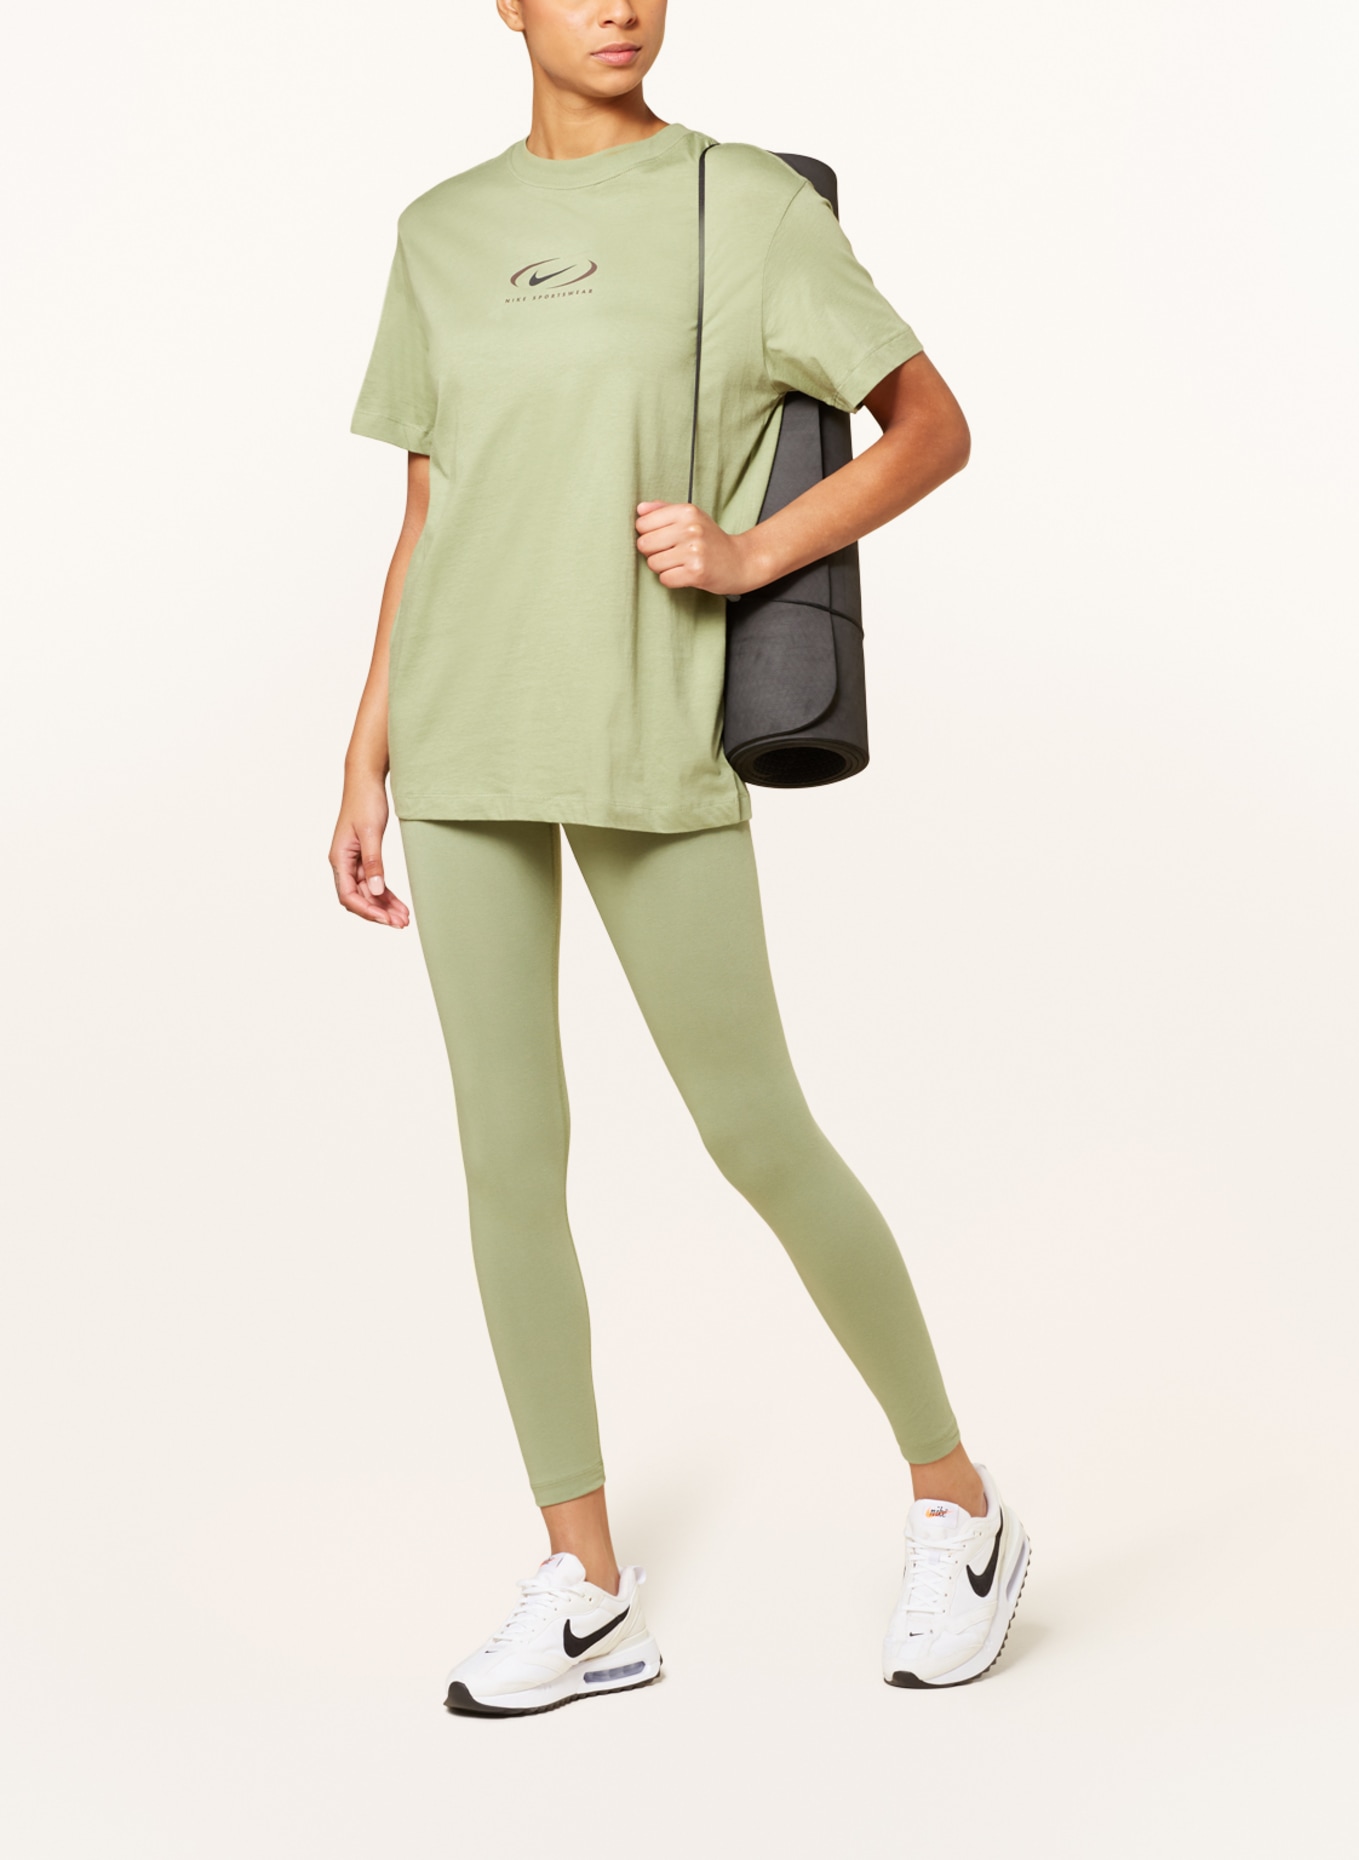 Nike Black & Lime Green stretch Leggings Athletic Pants Size Large | eBay